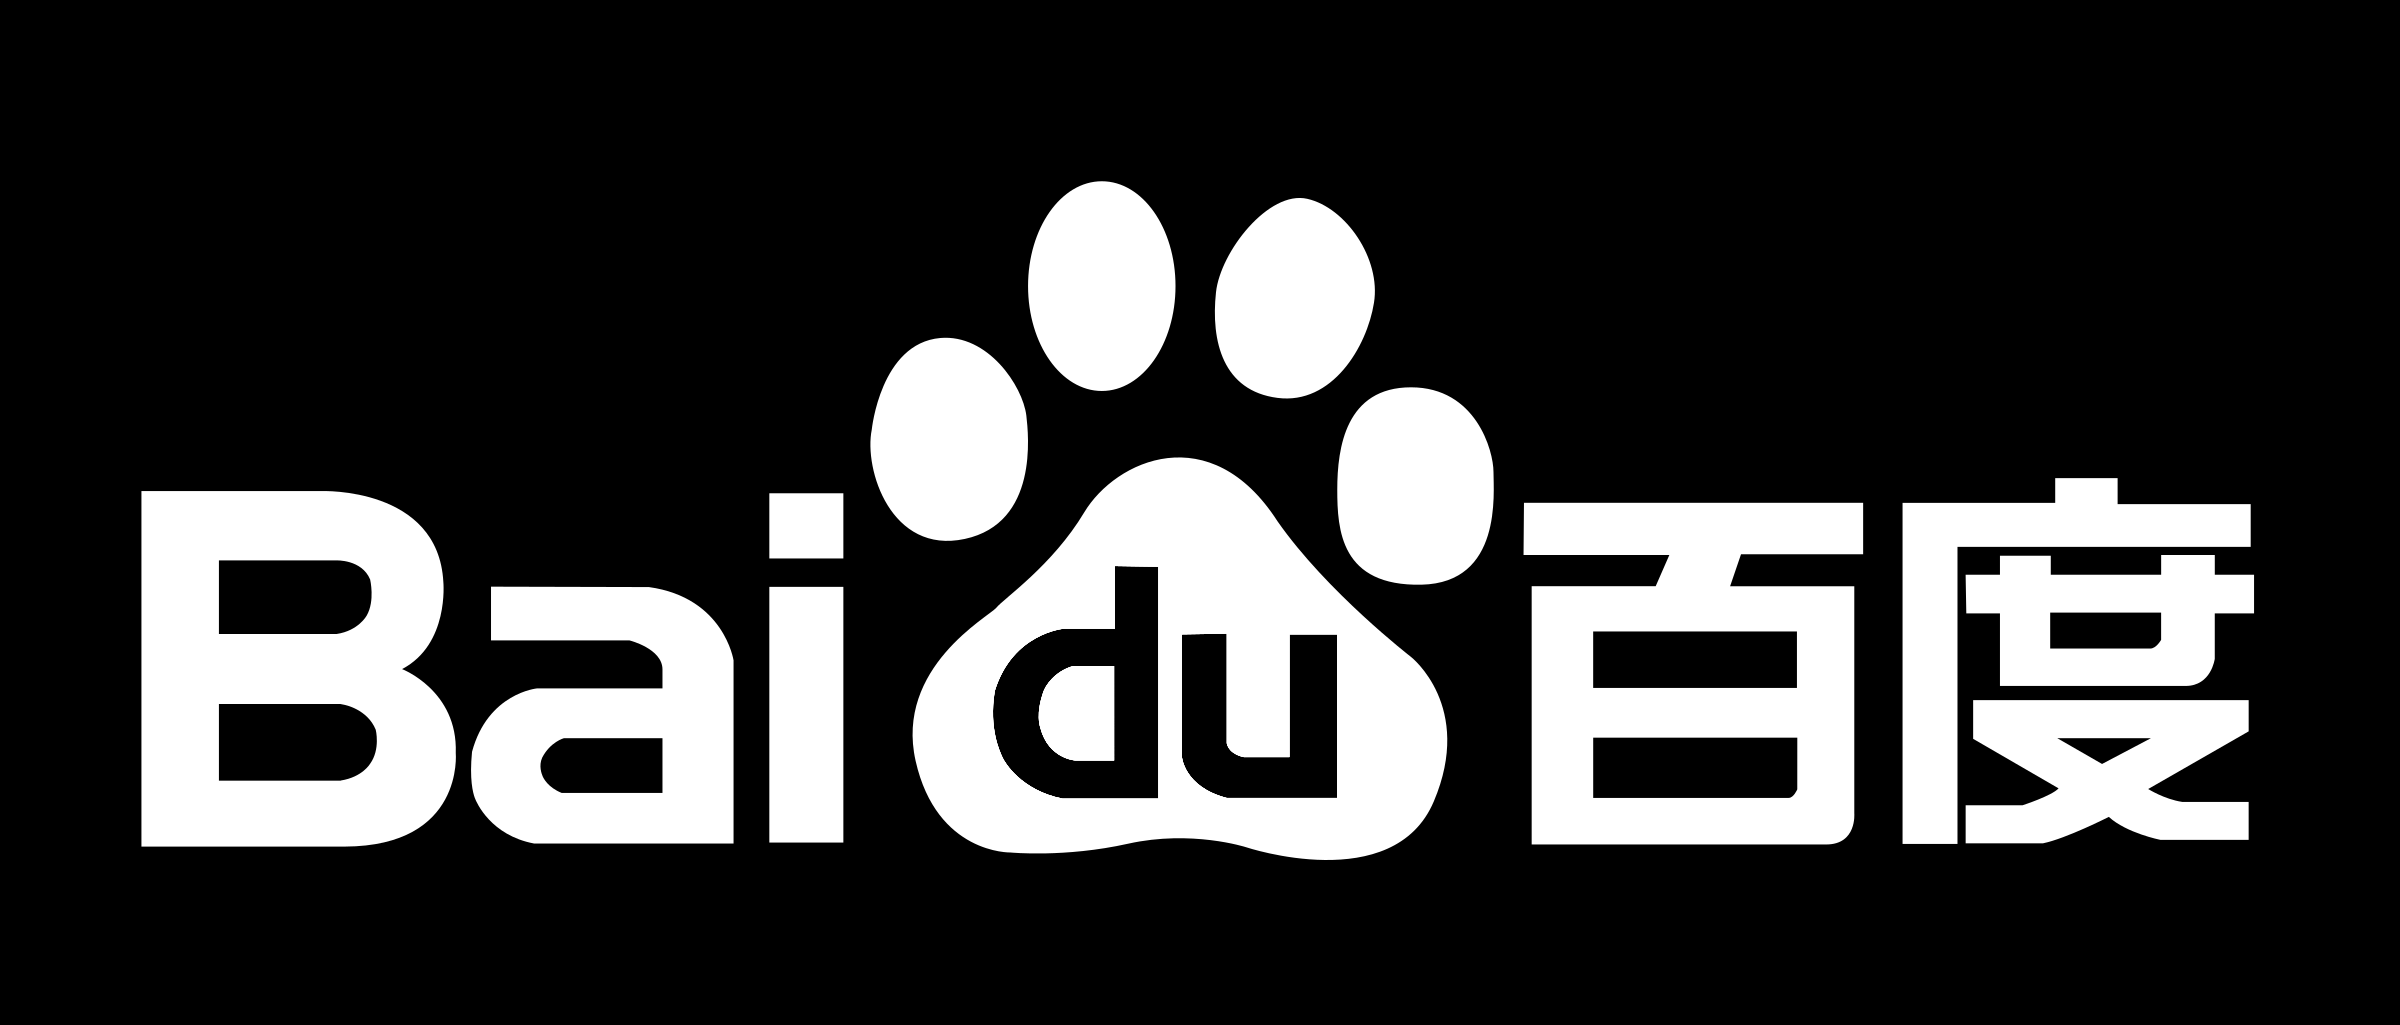 Baidu Network Logo - Baidu Logos